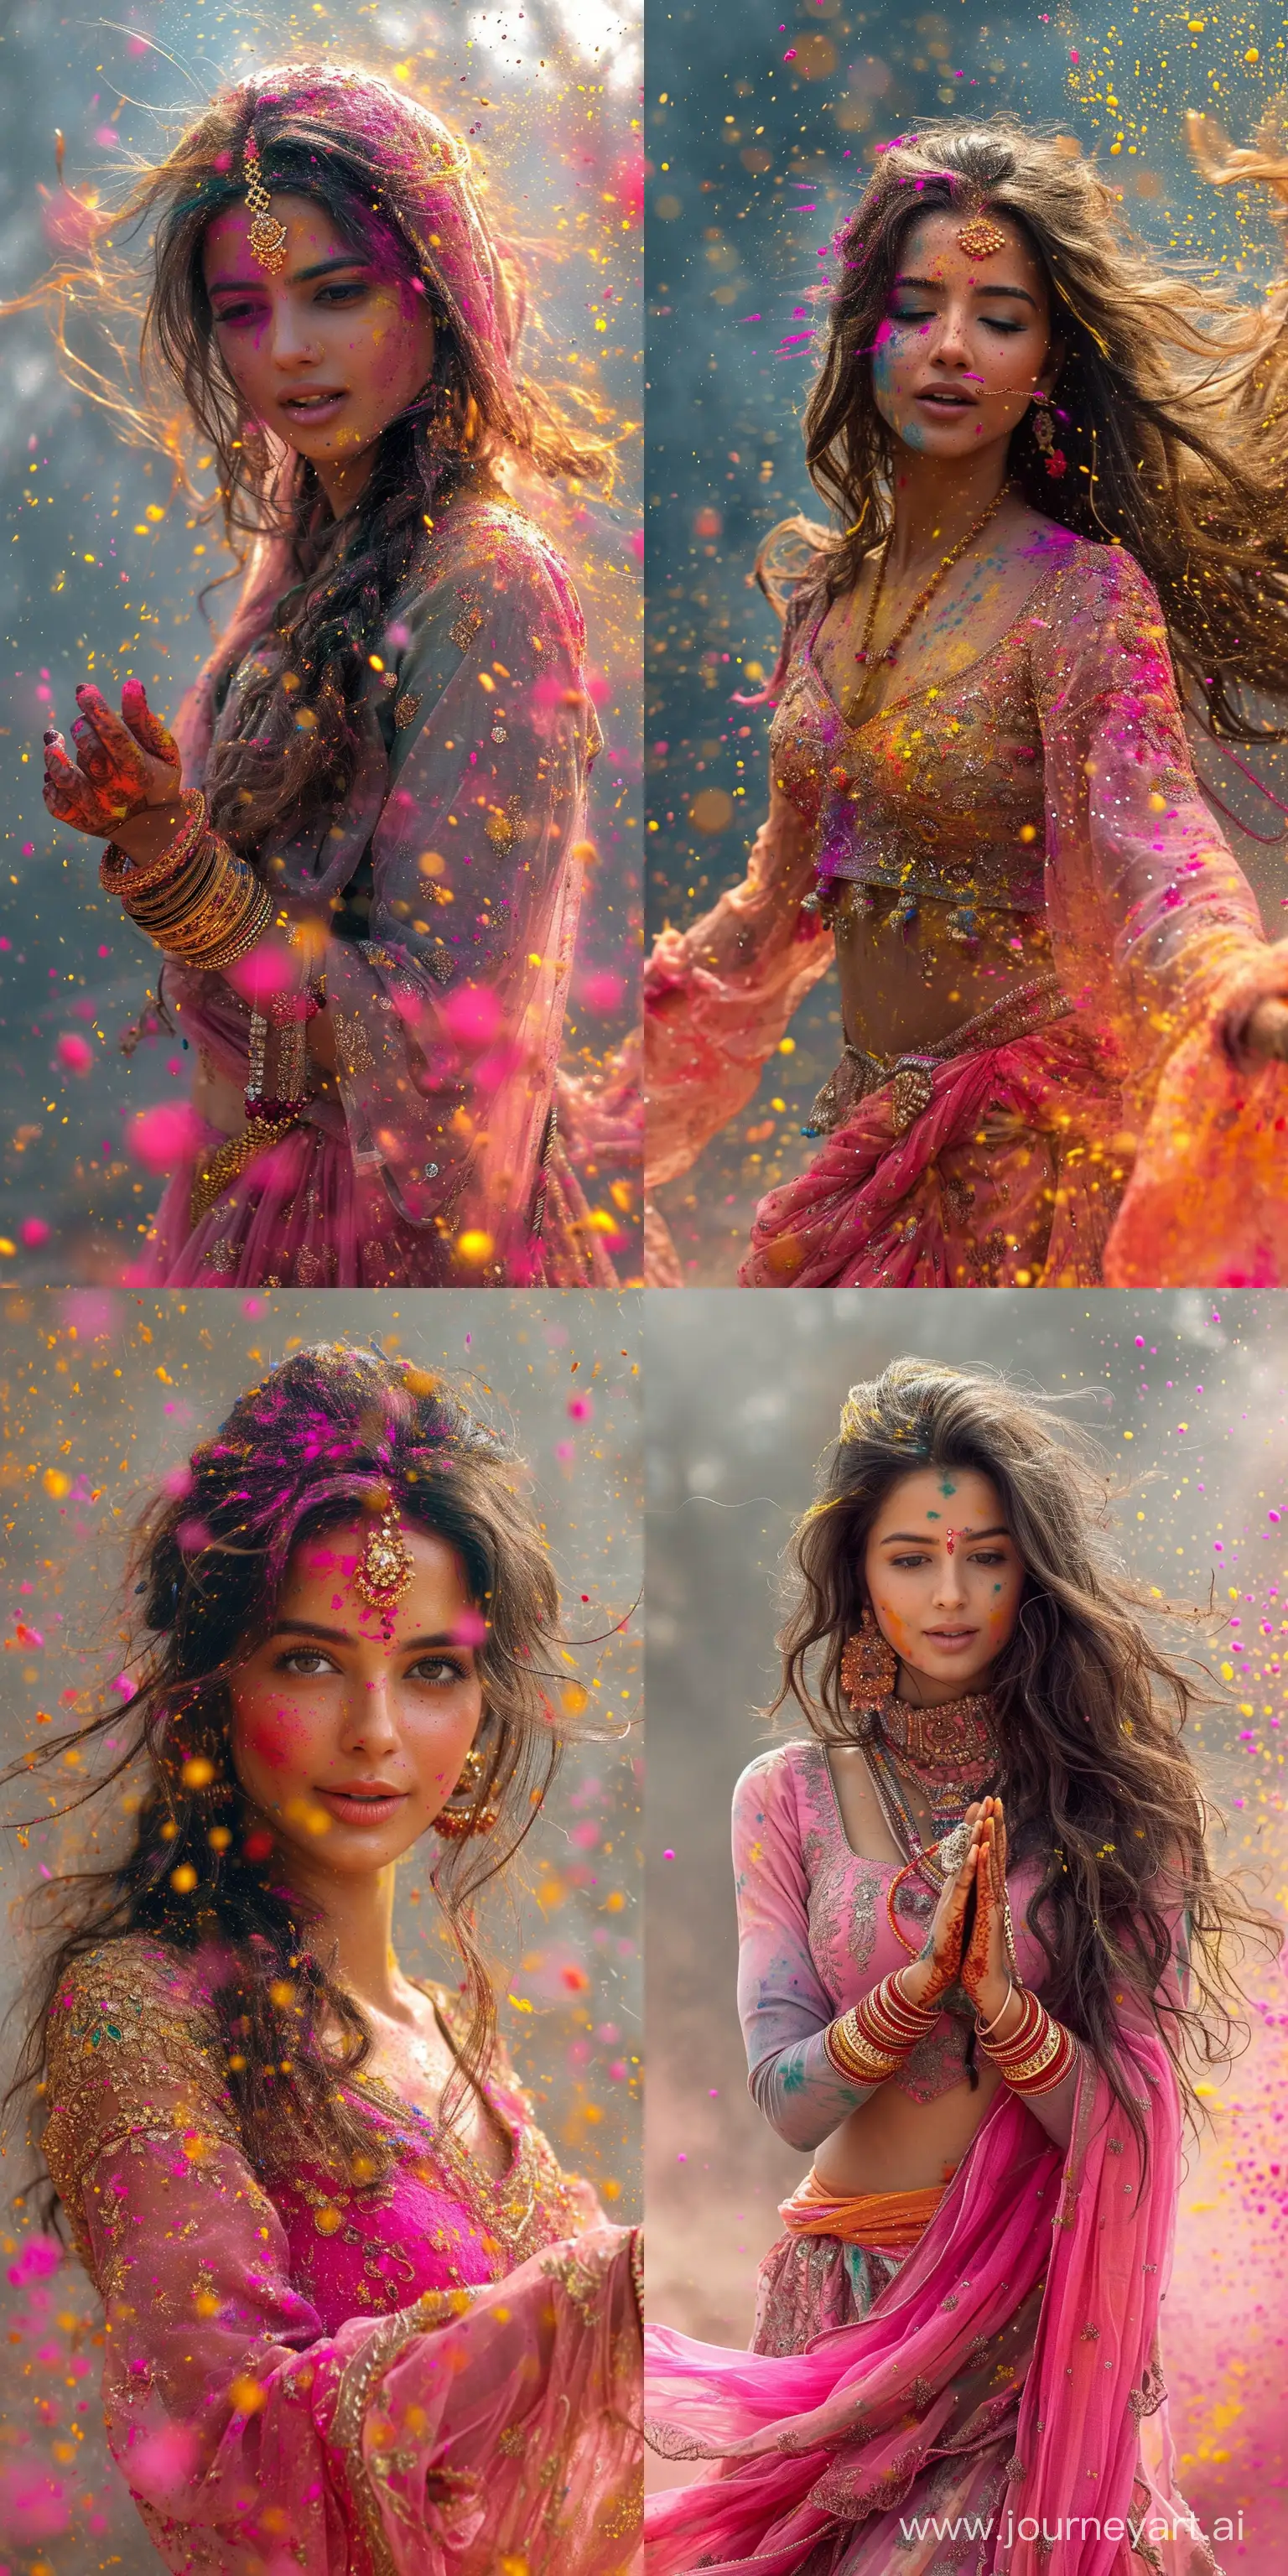 Punjabi-Woman-Dancing-in-Vibrant-Holi-Paints